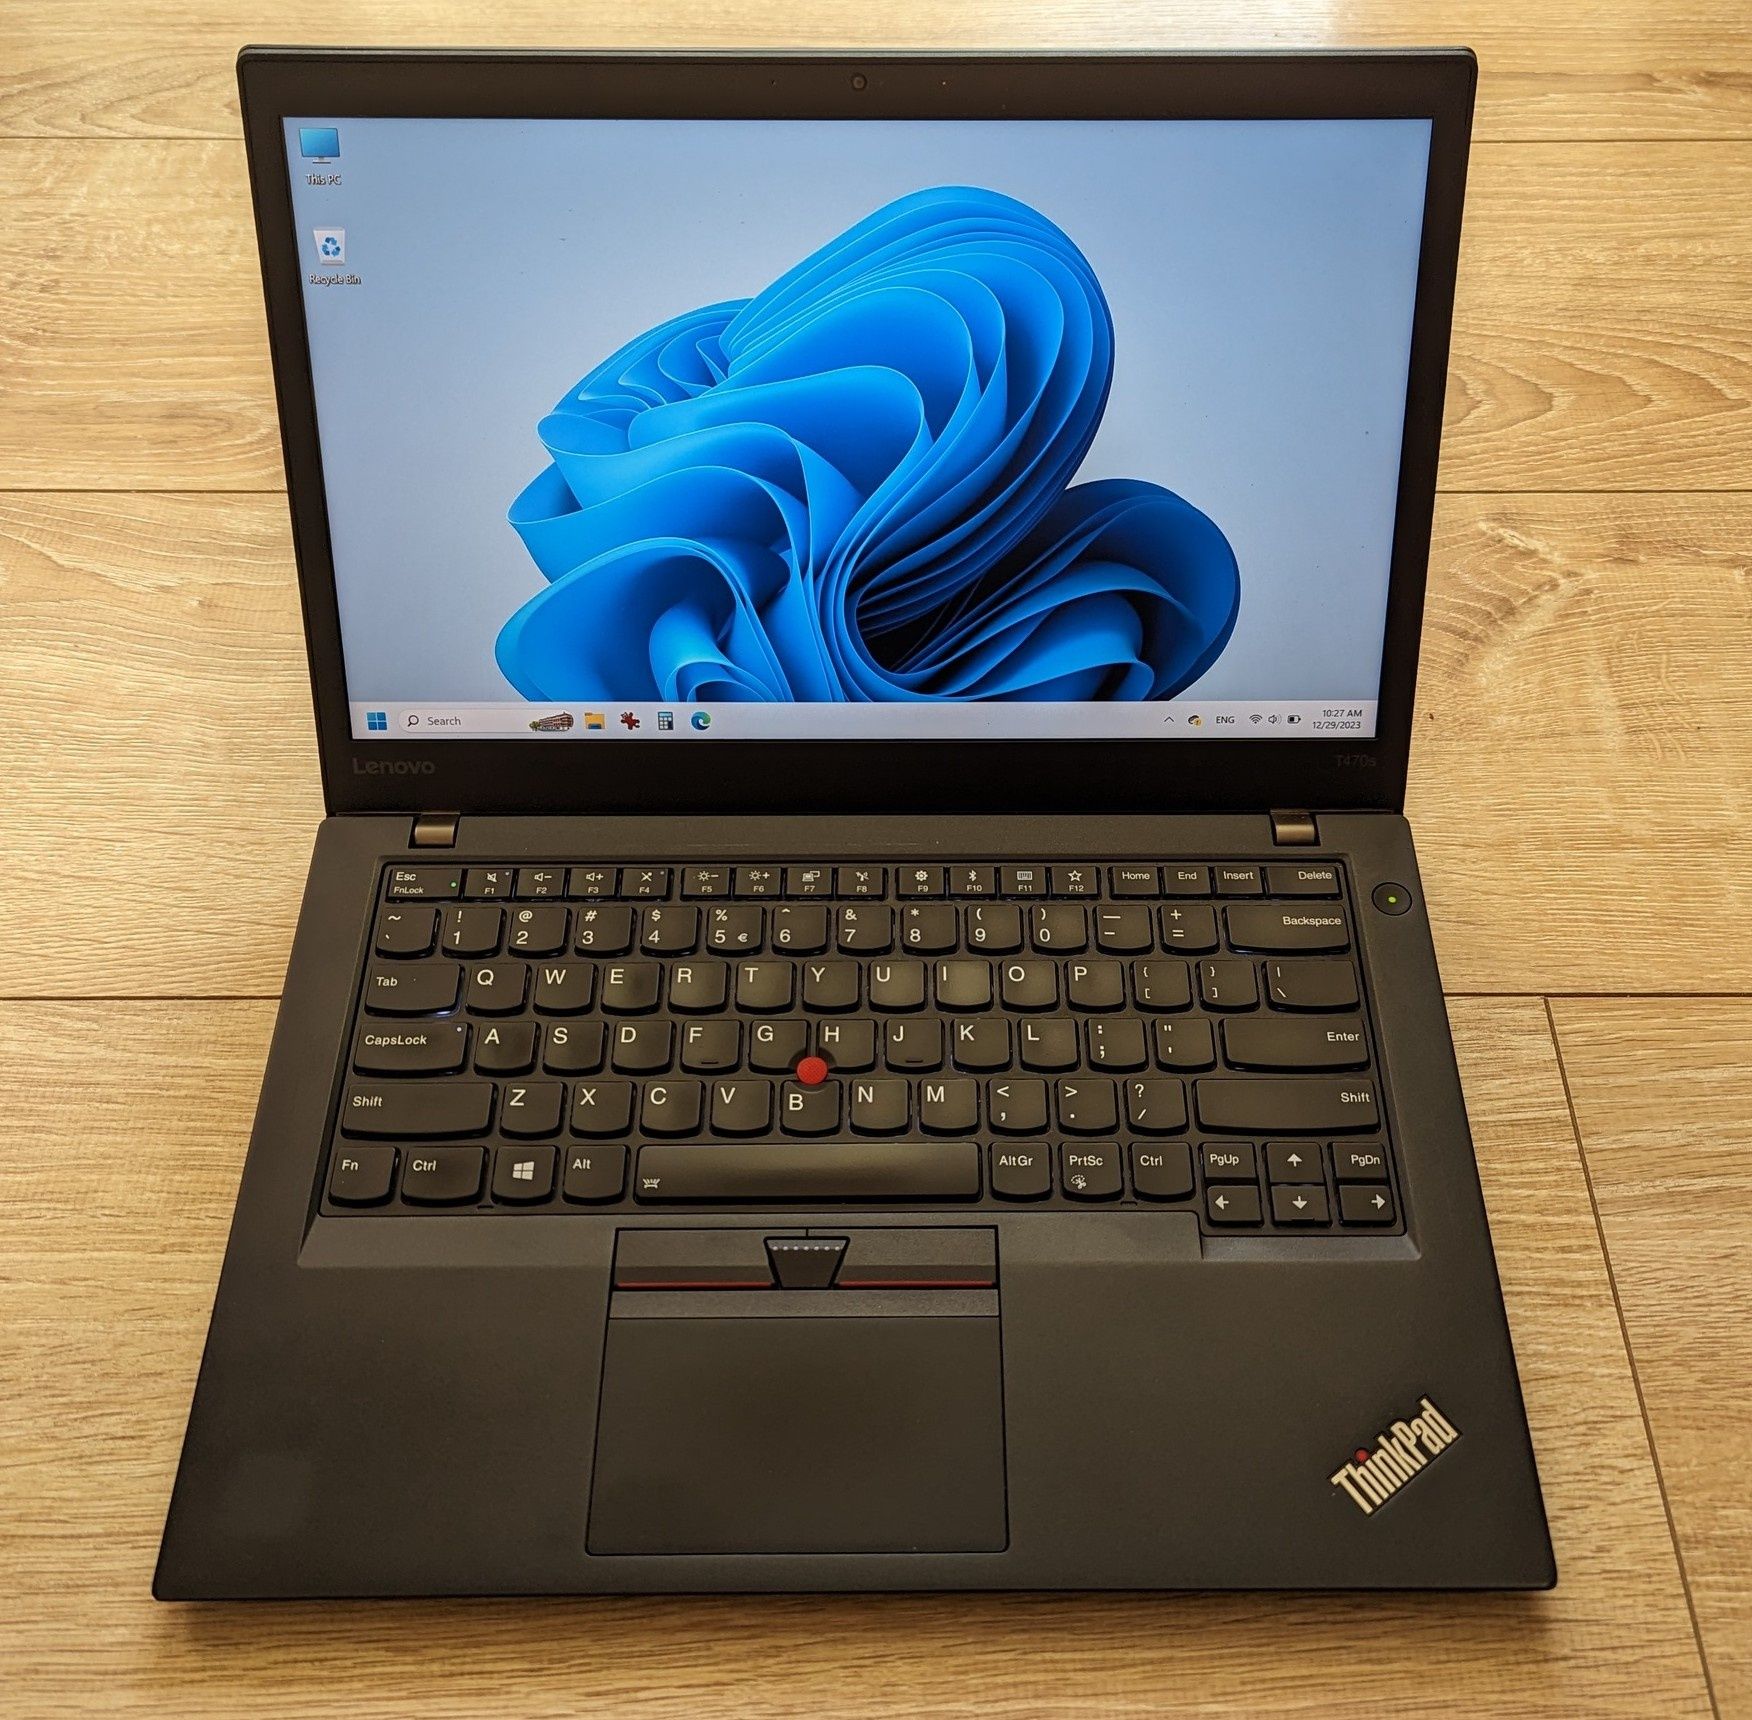 Laptop Lenovo T470s i7 touchscreen 8Gb RAM 500Gb HDD